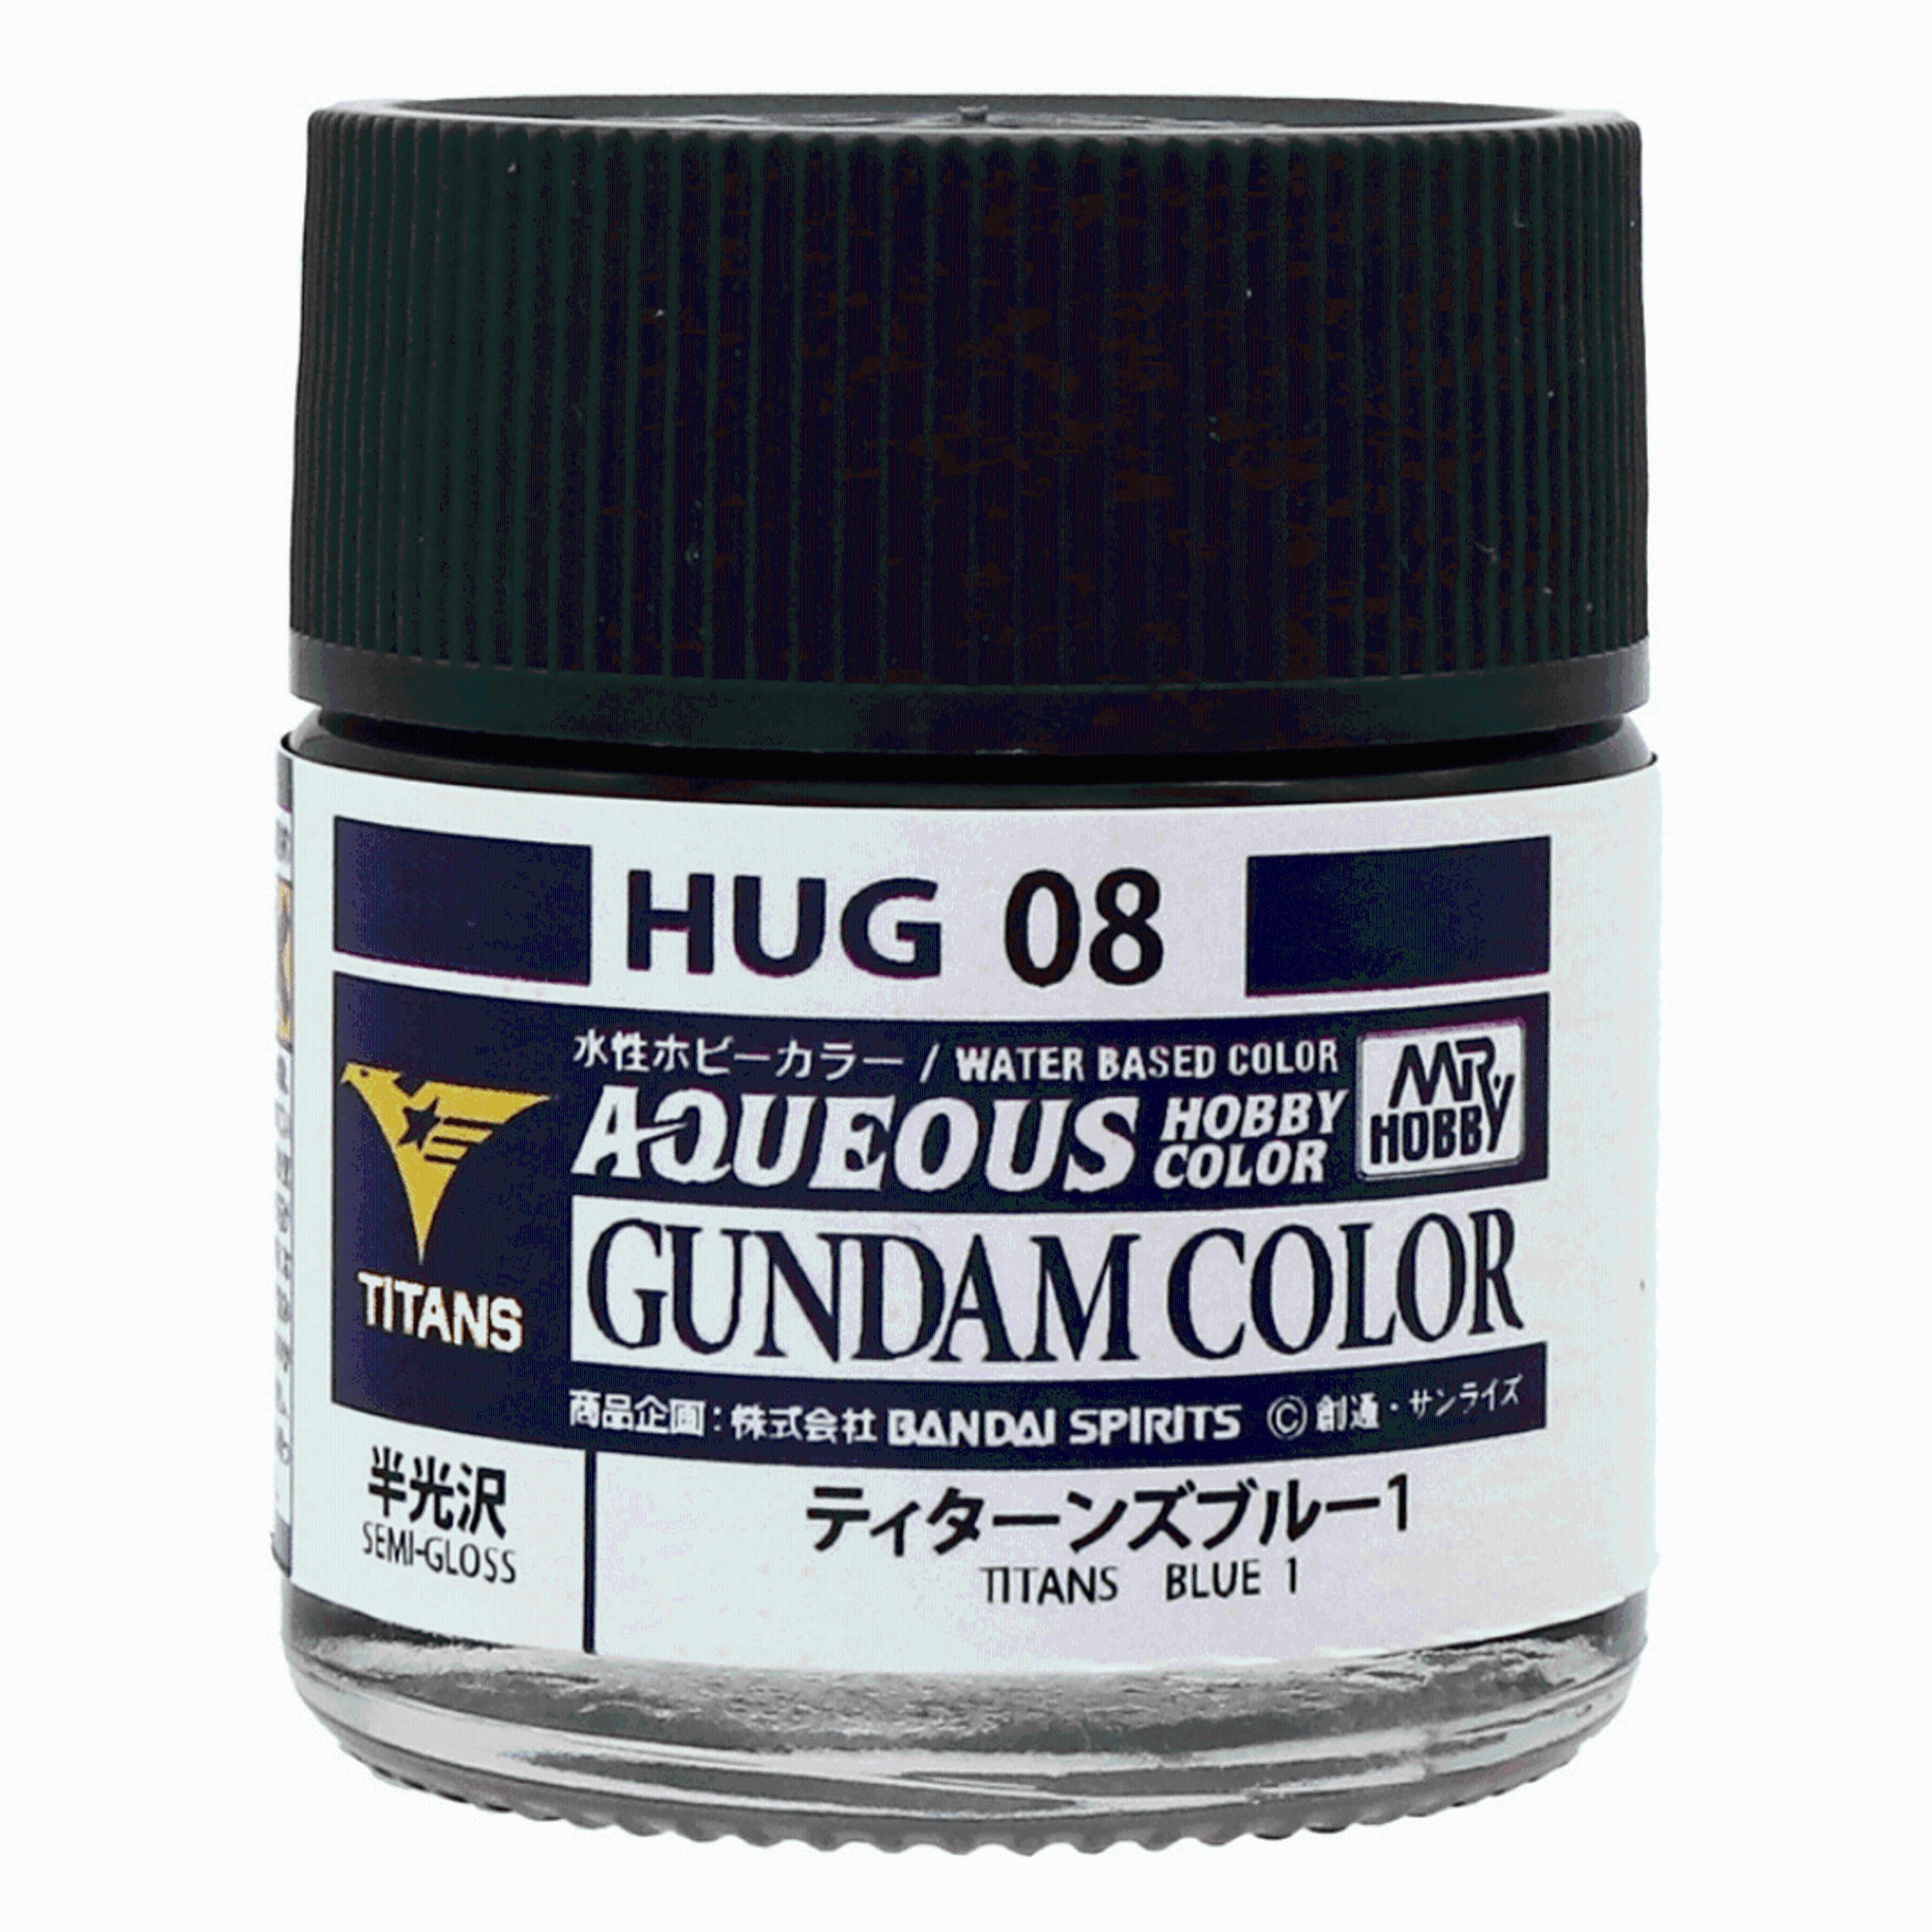 Aqueous HUG08 Titans Blue 1